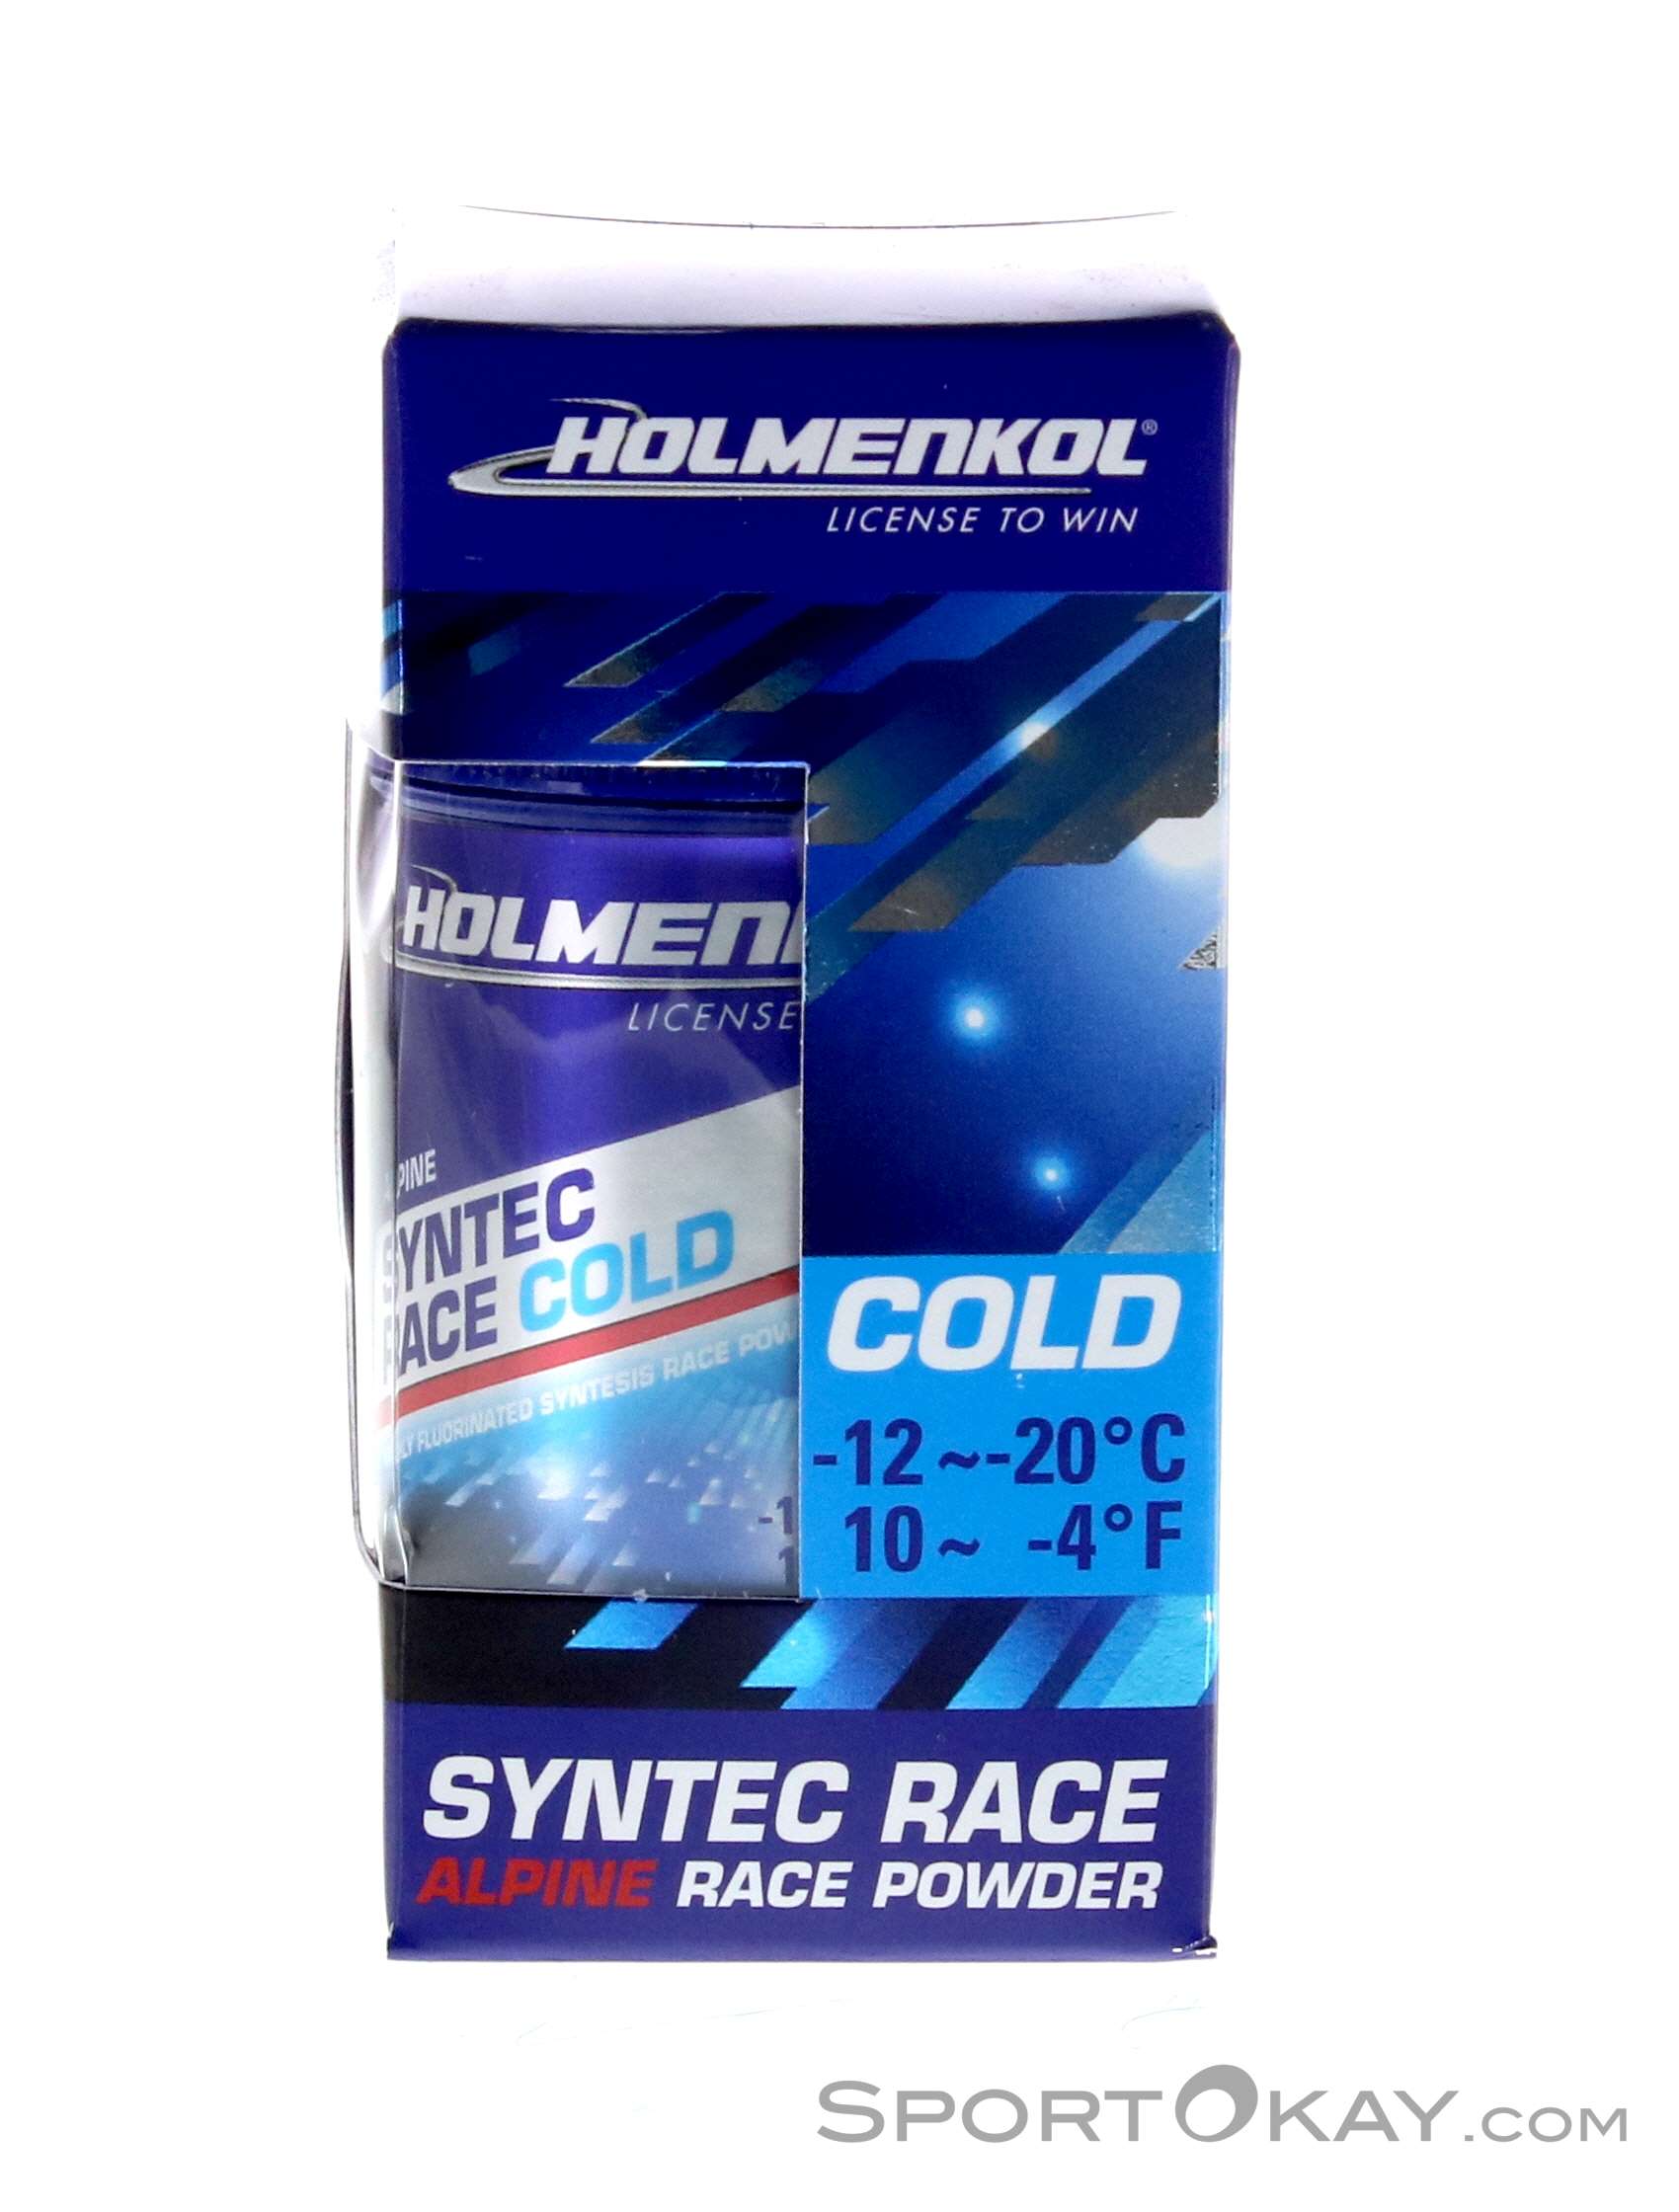 HOLMENKOL SYNTEC RACE POWDER COLD - スキー